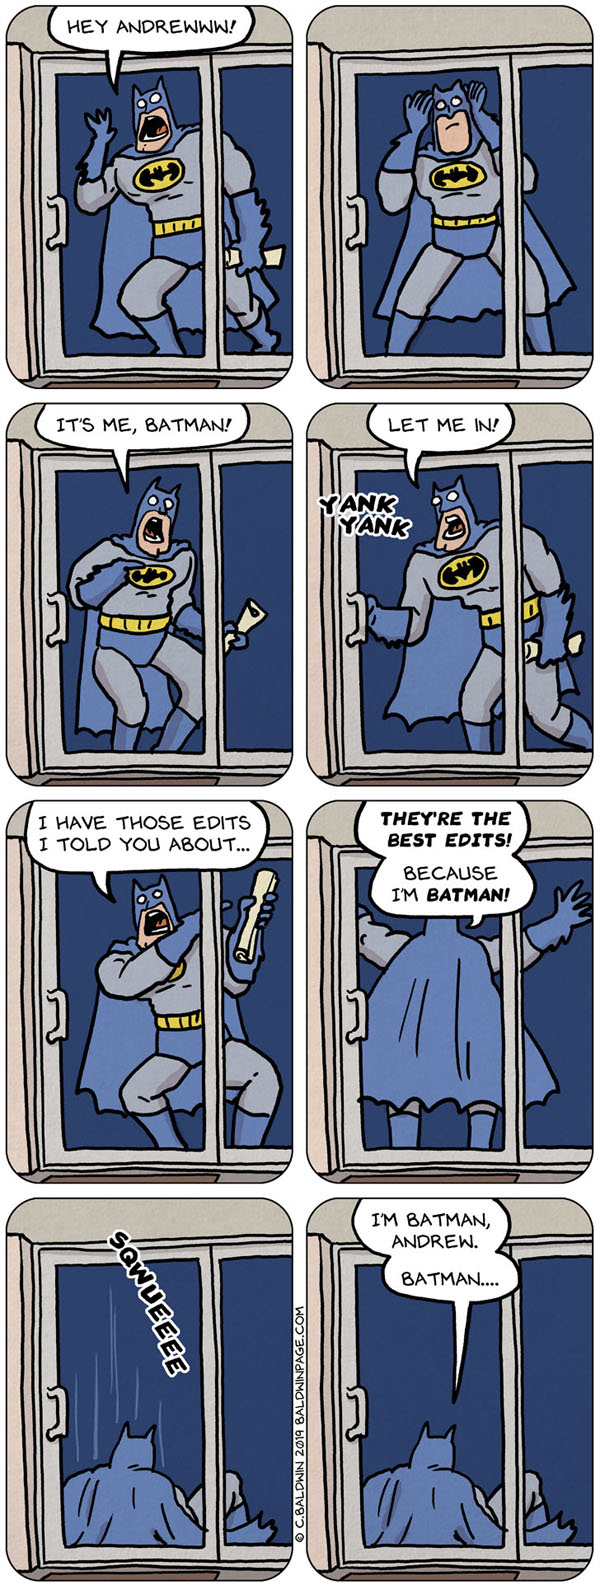 It’s Batman